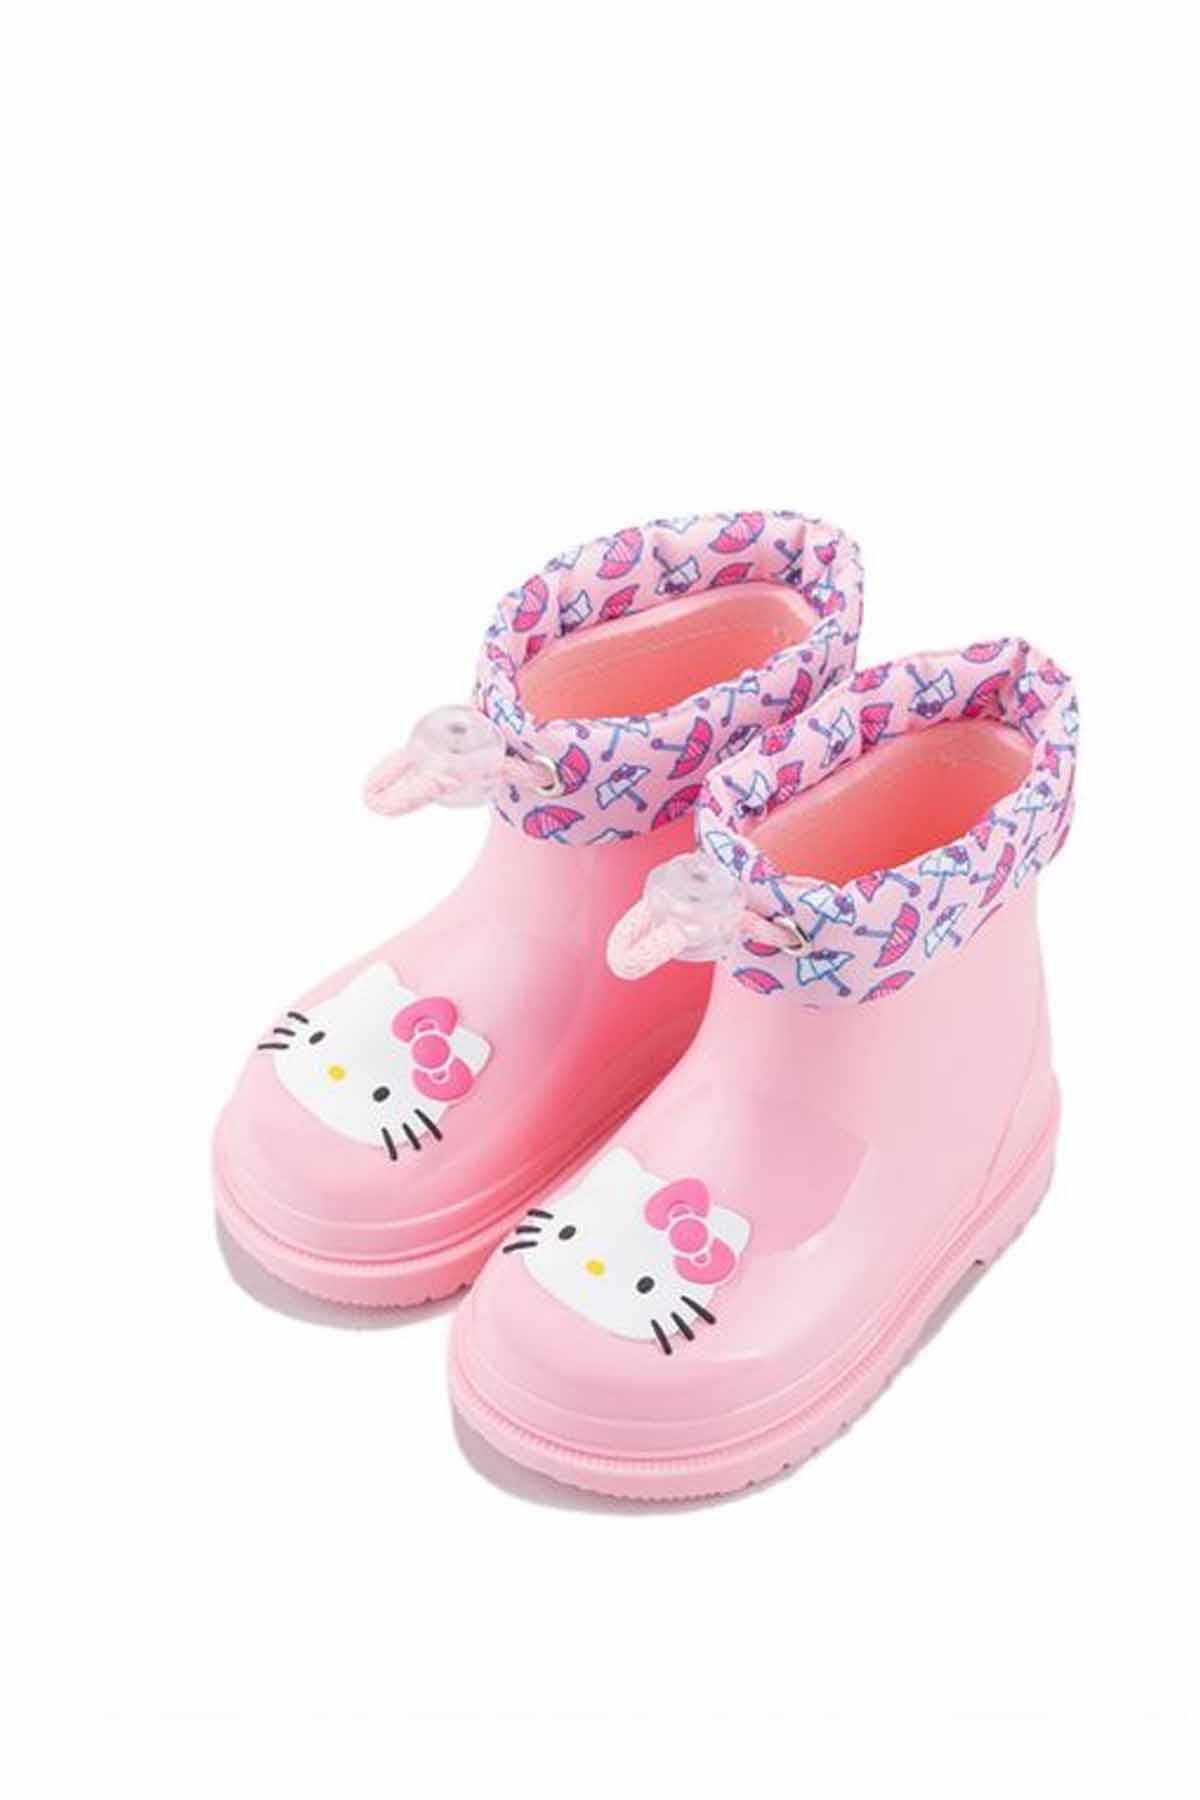 IGOR Bimbi Hello Kitty Çocuk Bot Ayakkabı W10261-010rosa